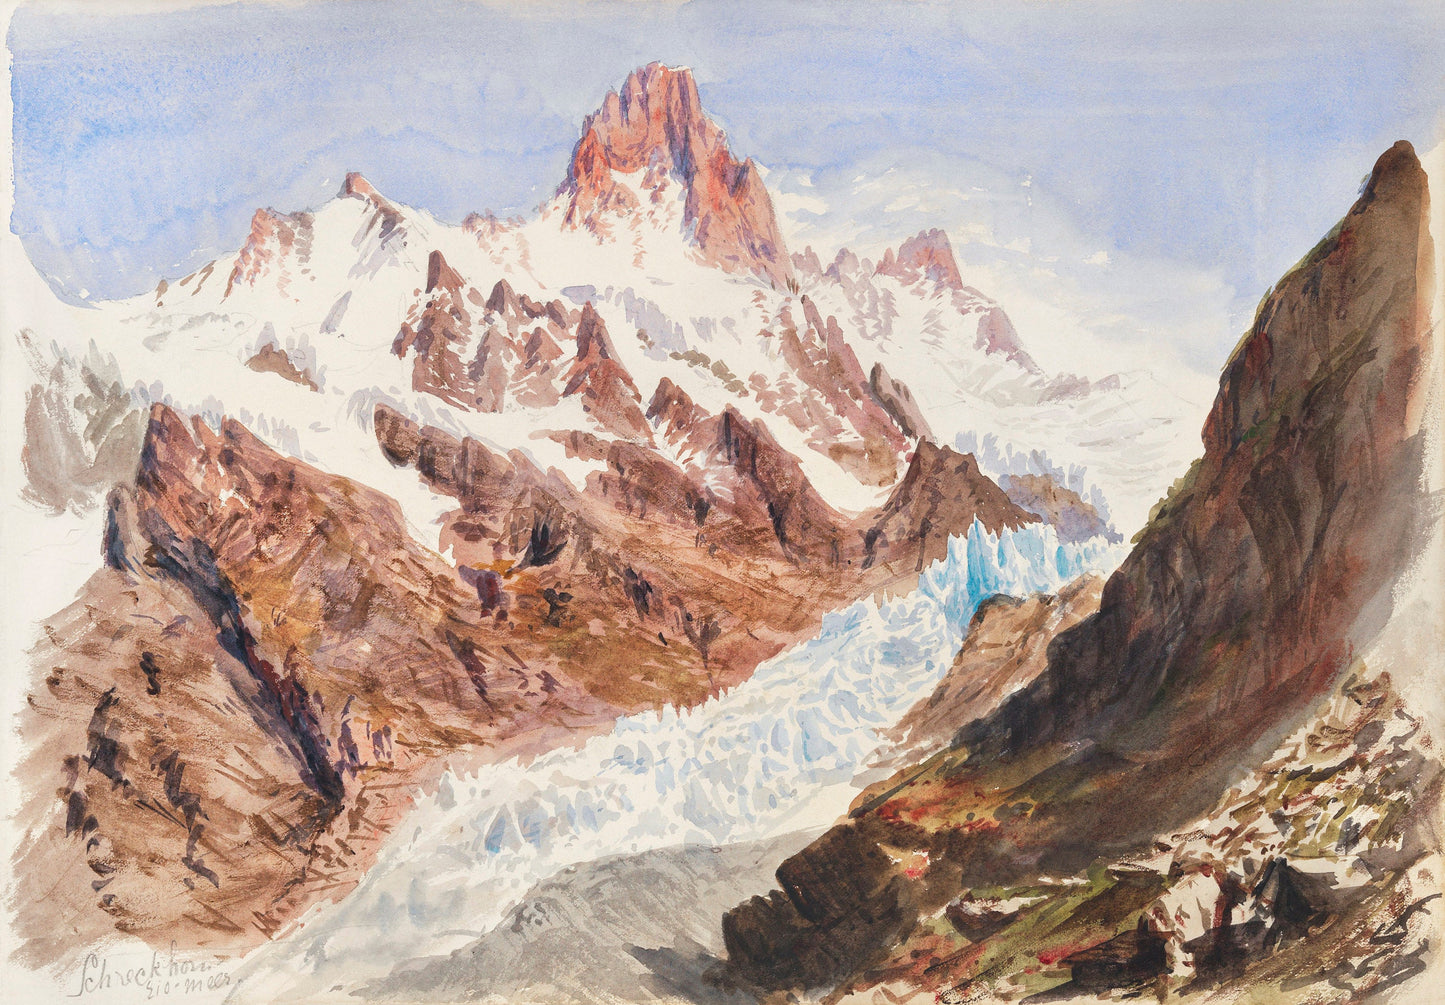 Schreckhorn, Eismeer from Splendid Mountain Watercolours Sketchbook by John Singer Sargent Illustration Print Poster Wall Hanging Decor